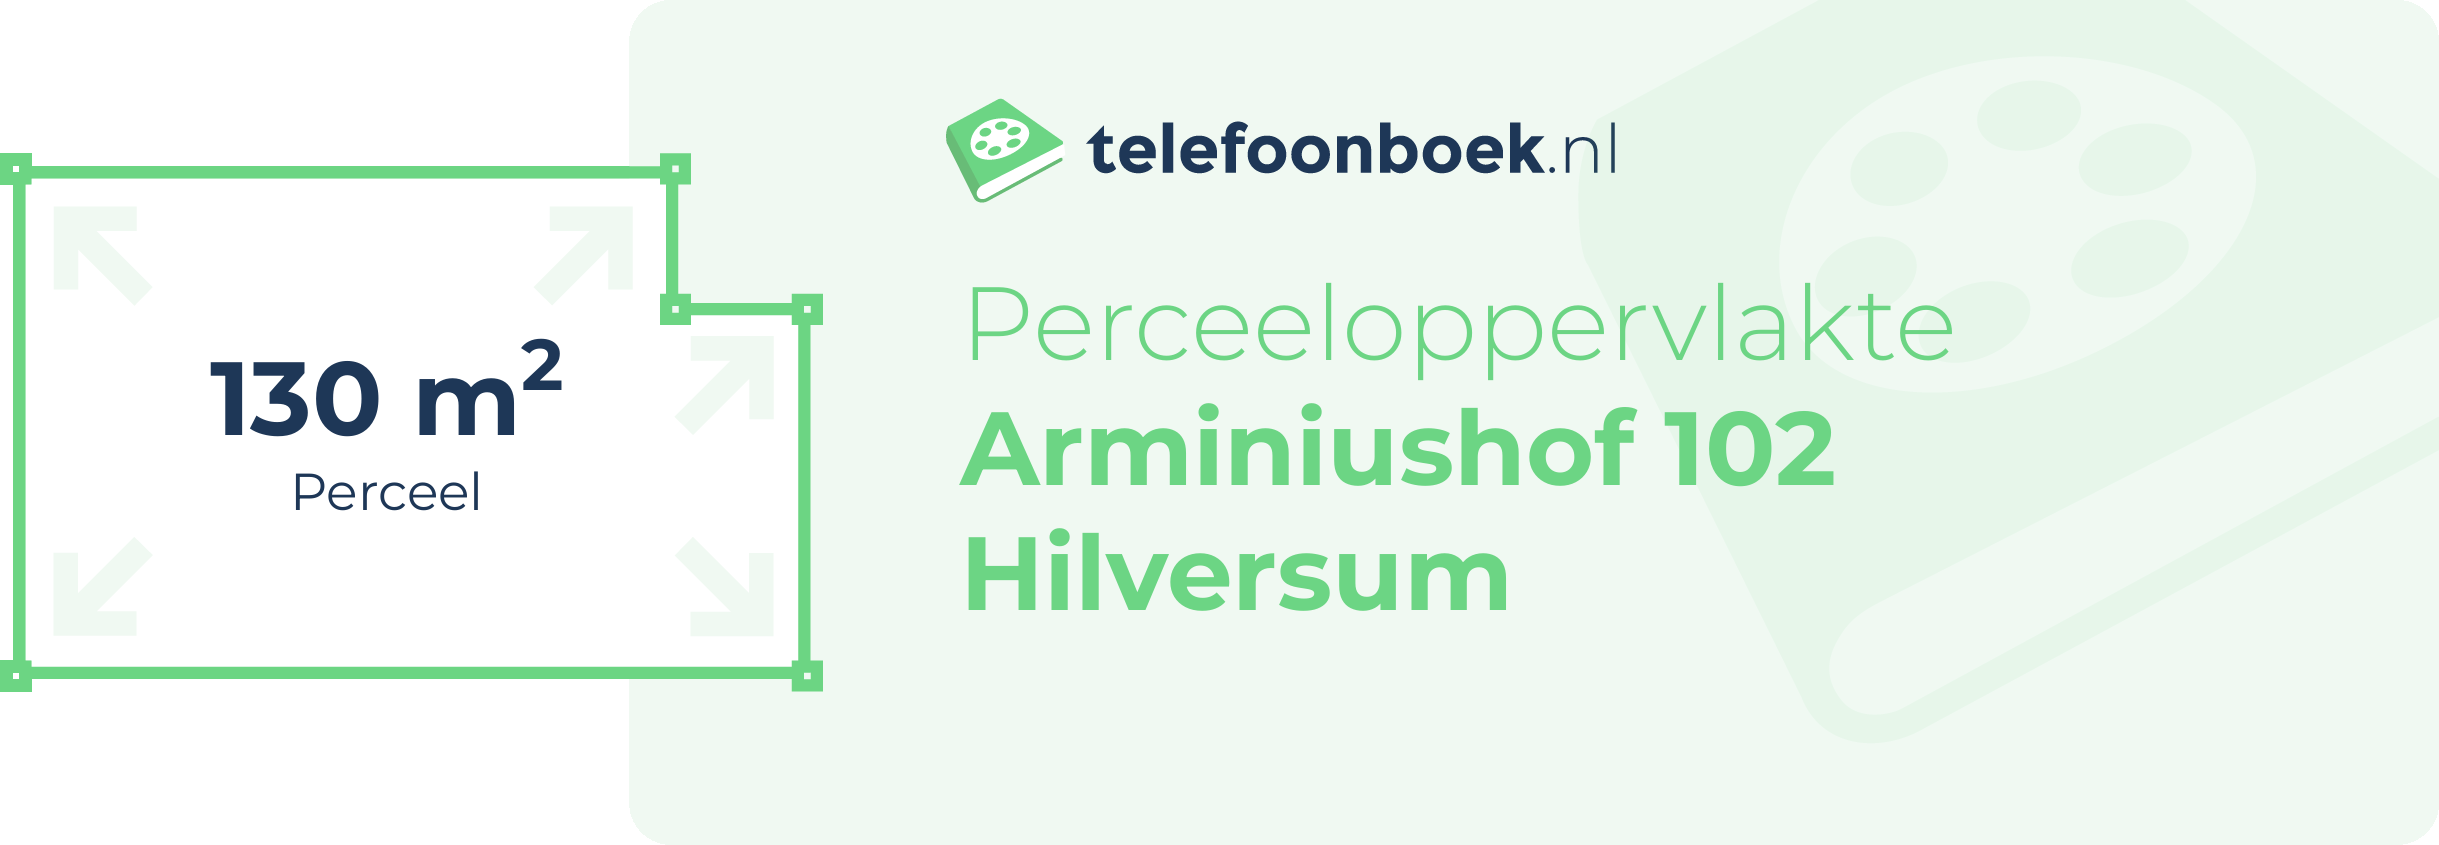 Perceeloppervlakte Arminiushof 102 Hilversum